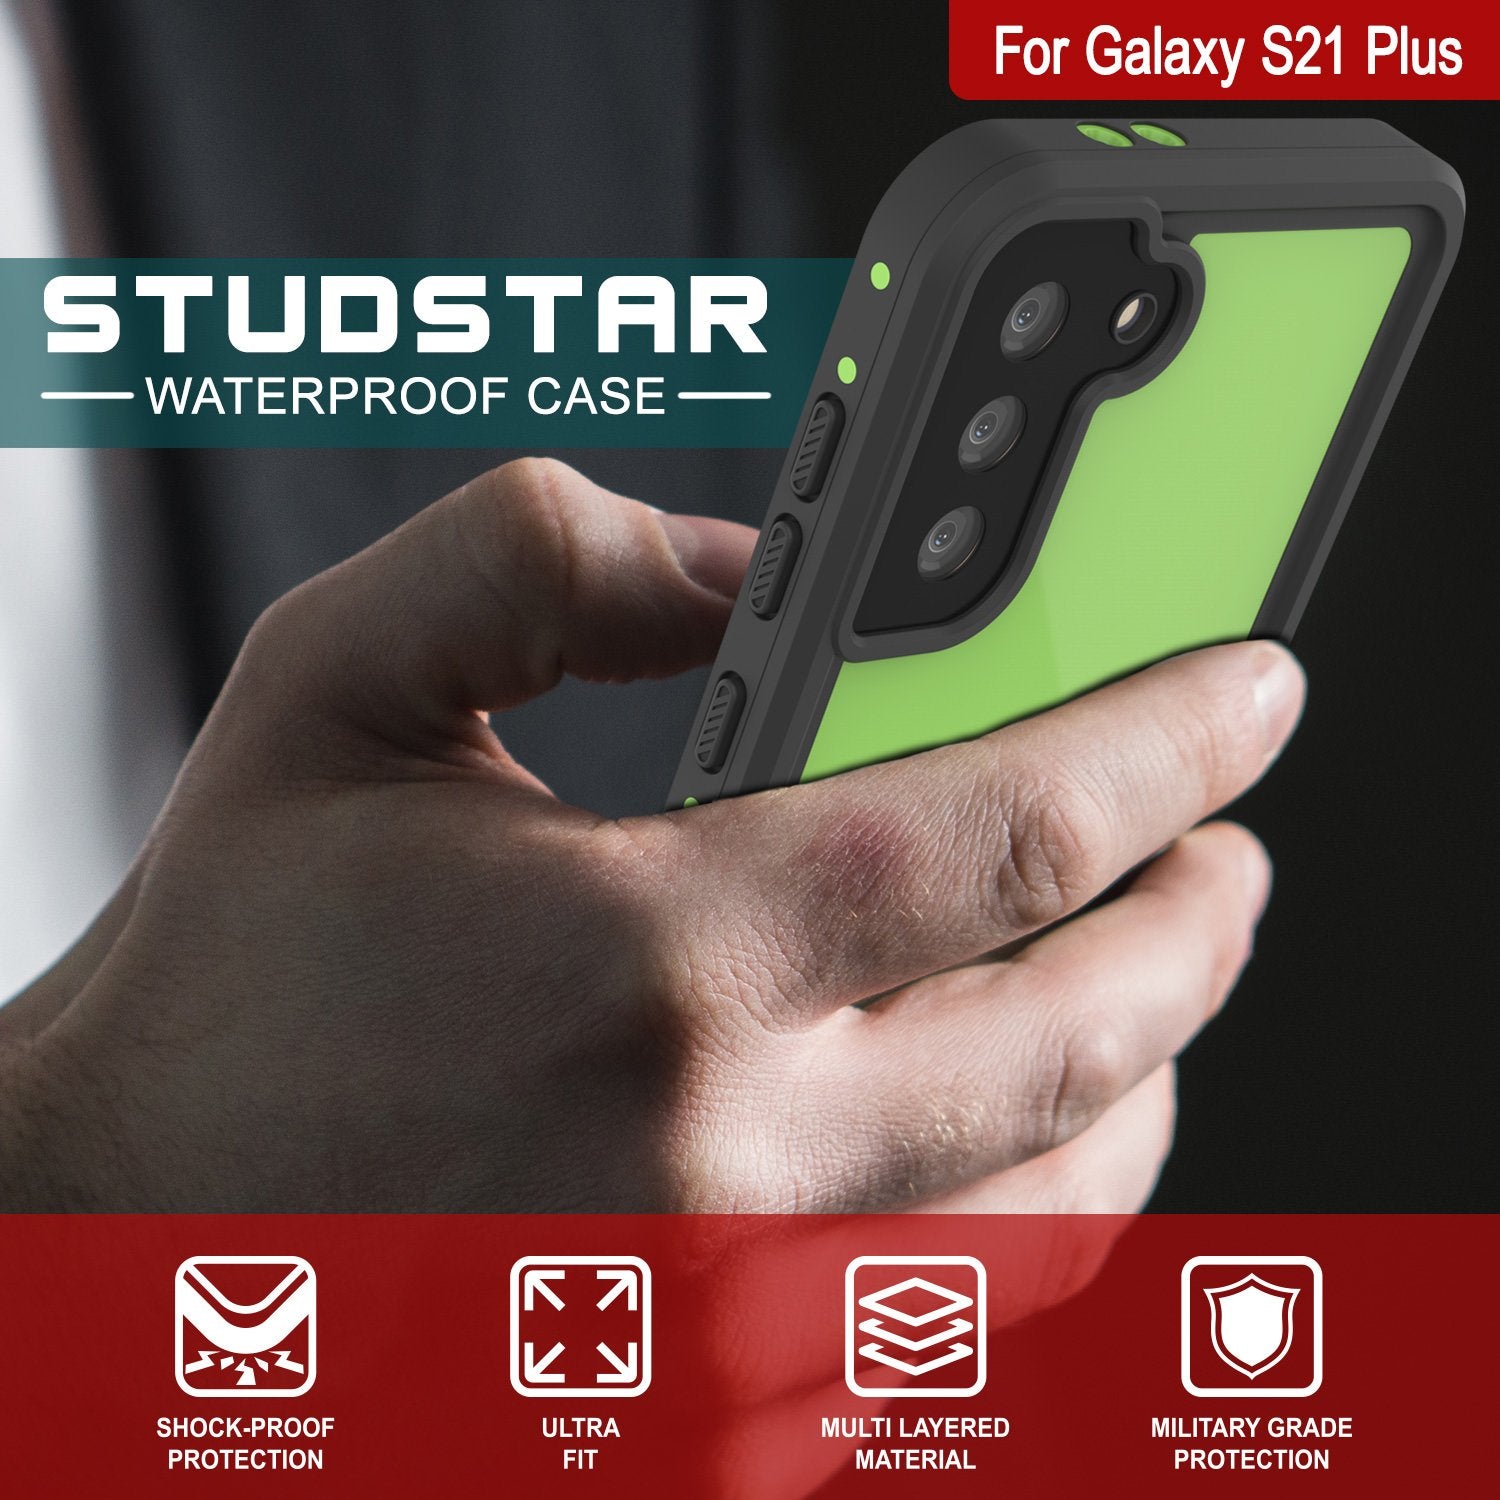 Galaxy S21+ Plus Waterproof Case PunkCase StudStar Light Green Thin 6.6ft Underwater IP68 ShockProof